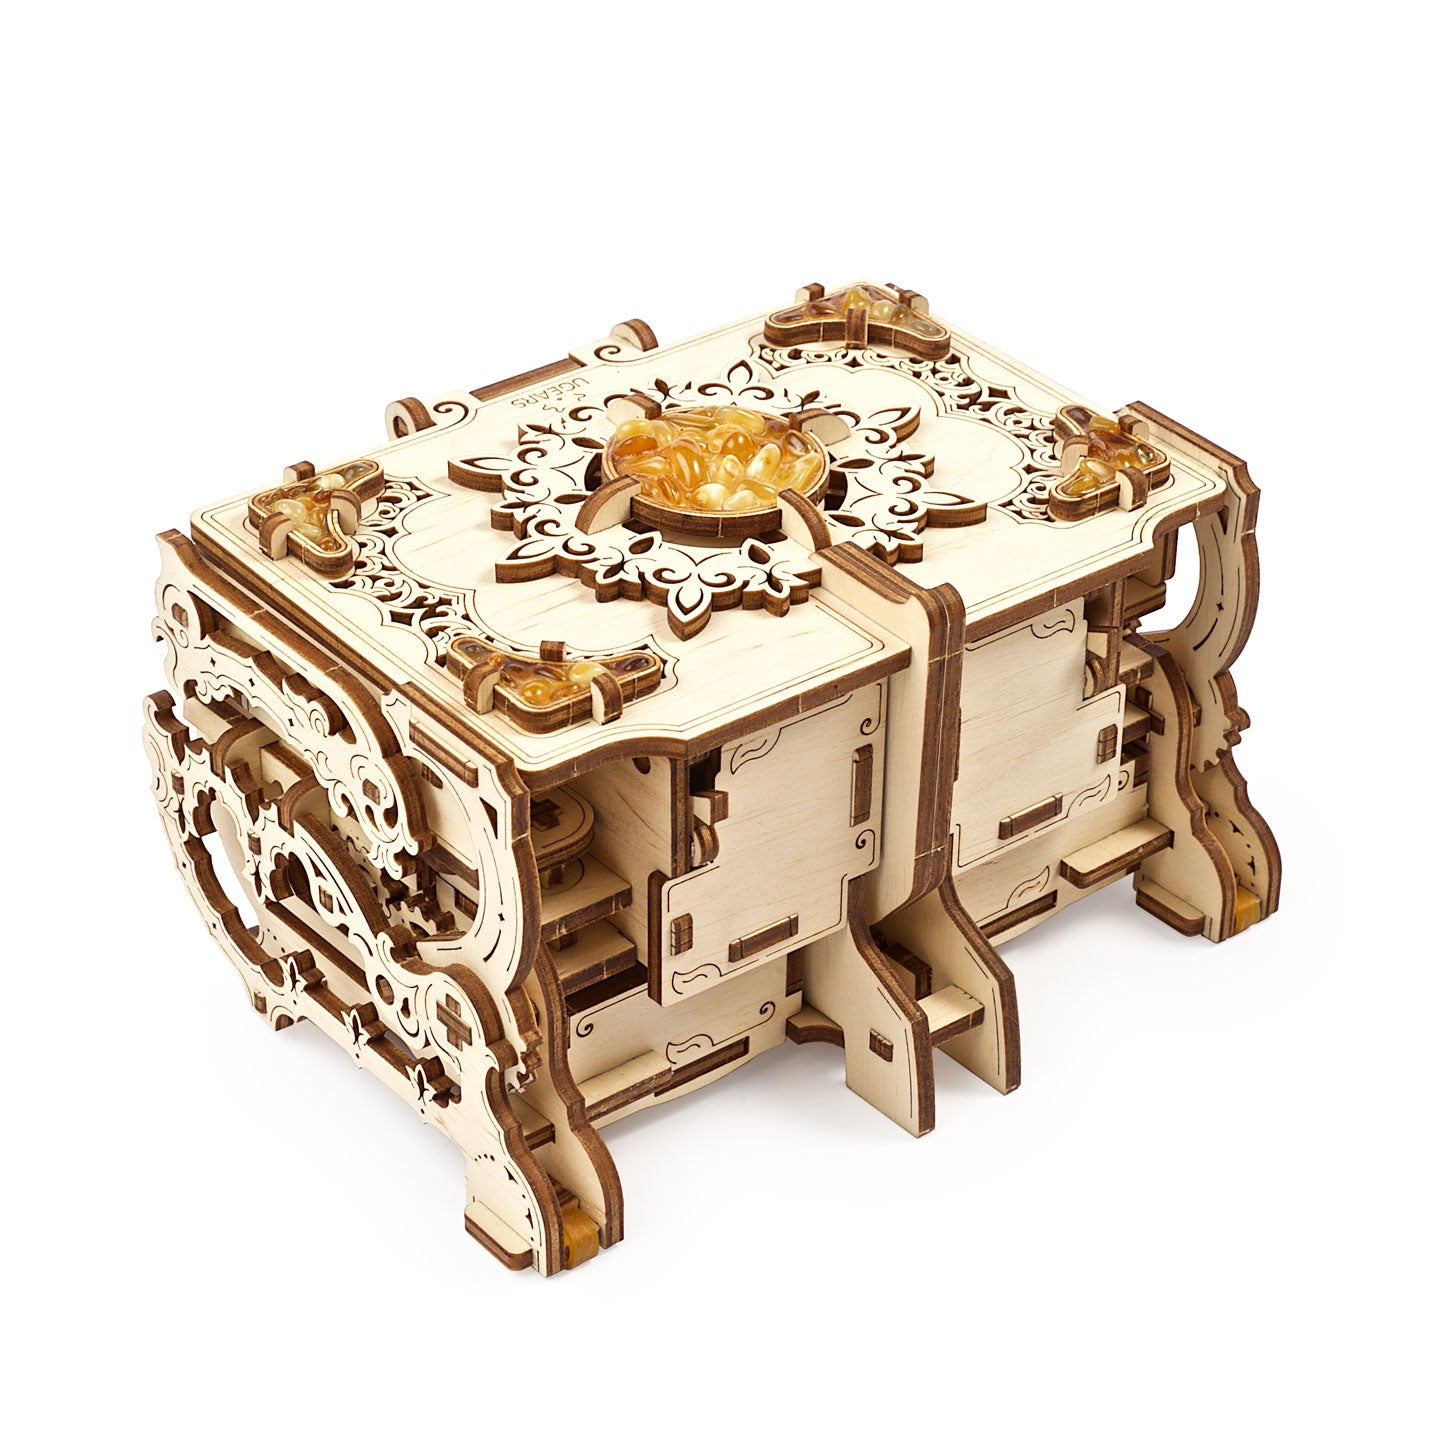 “The Amber Box” mechanical model kit